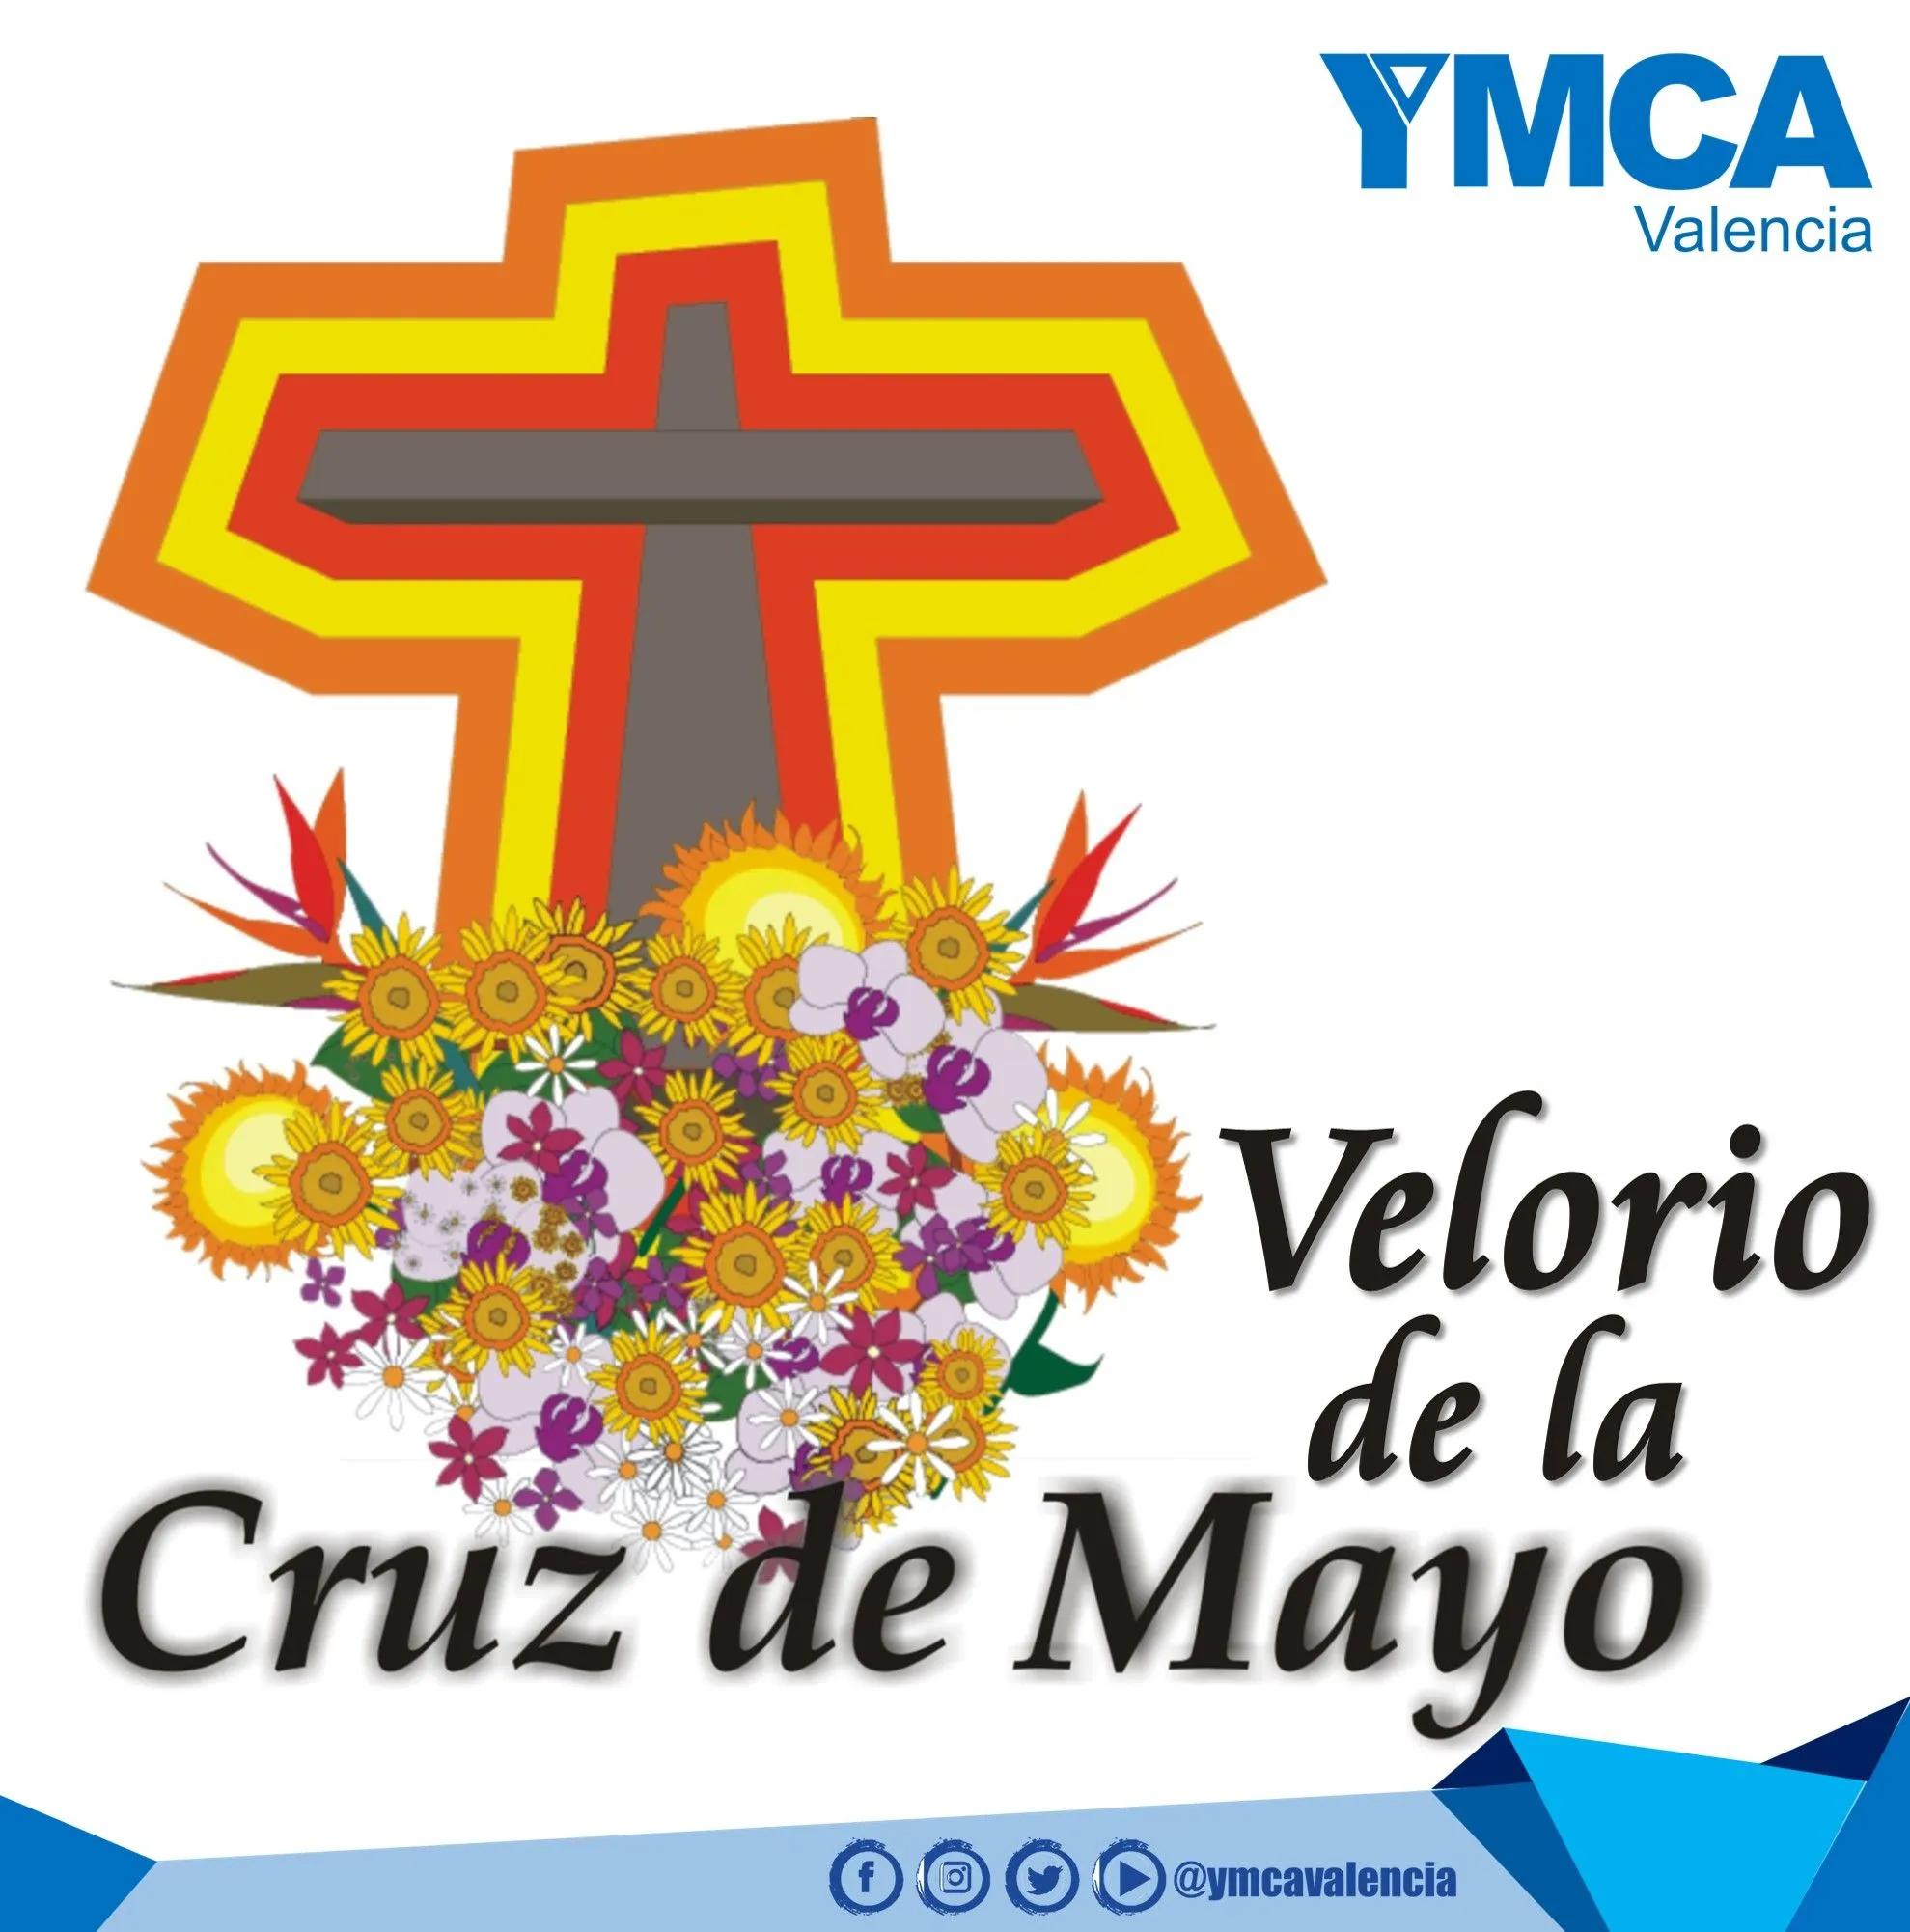 YMCA Valencia on X: 